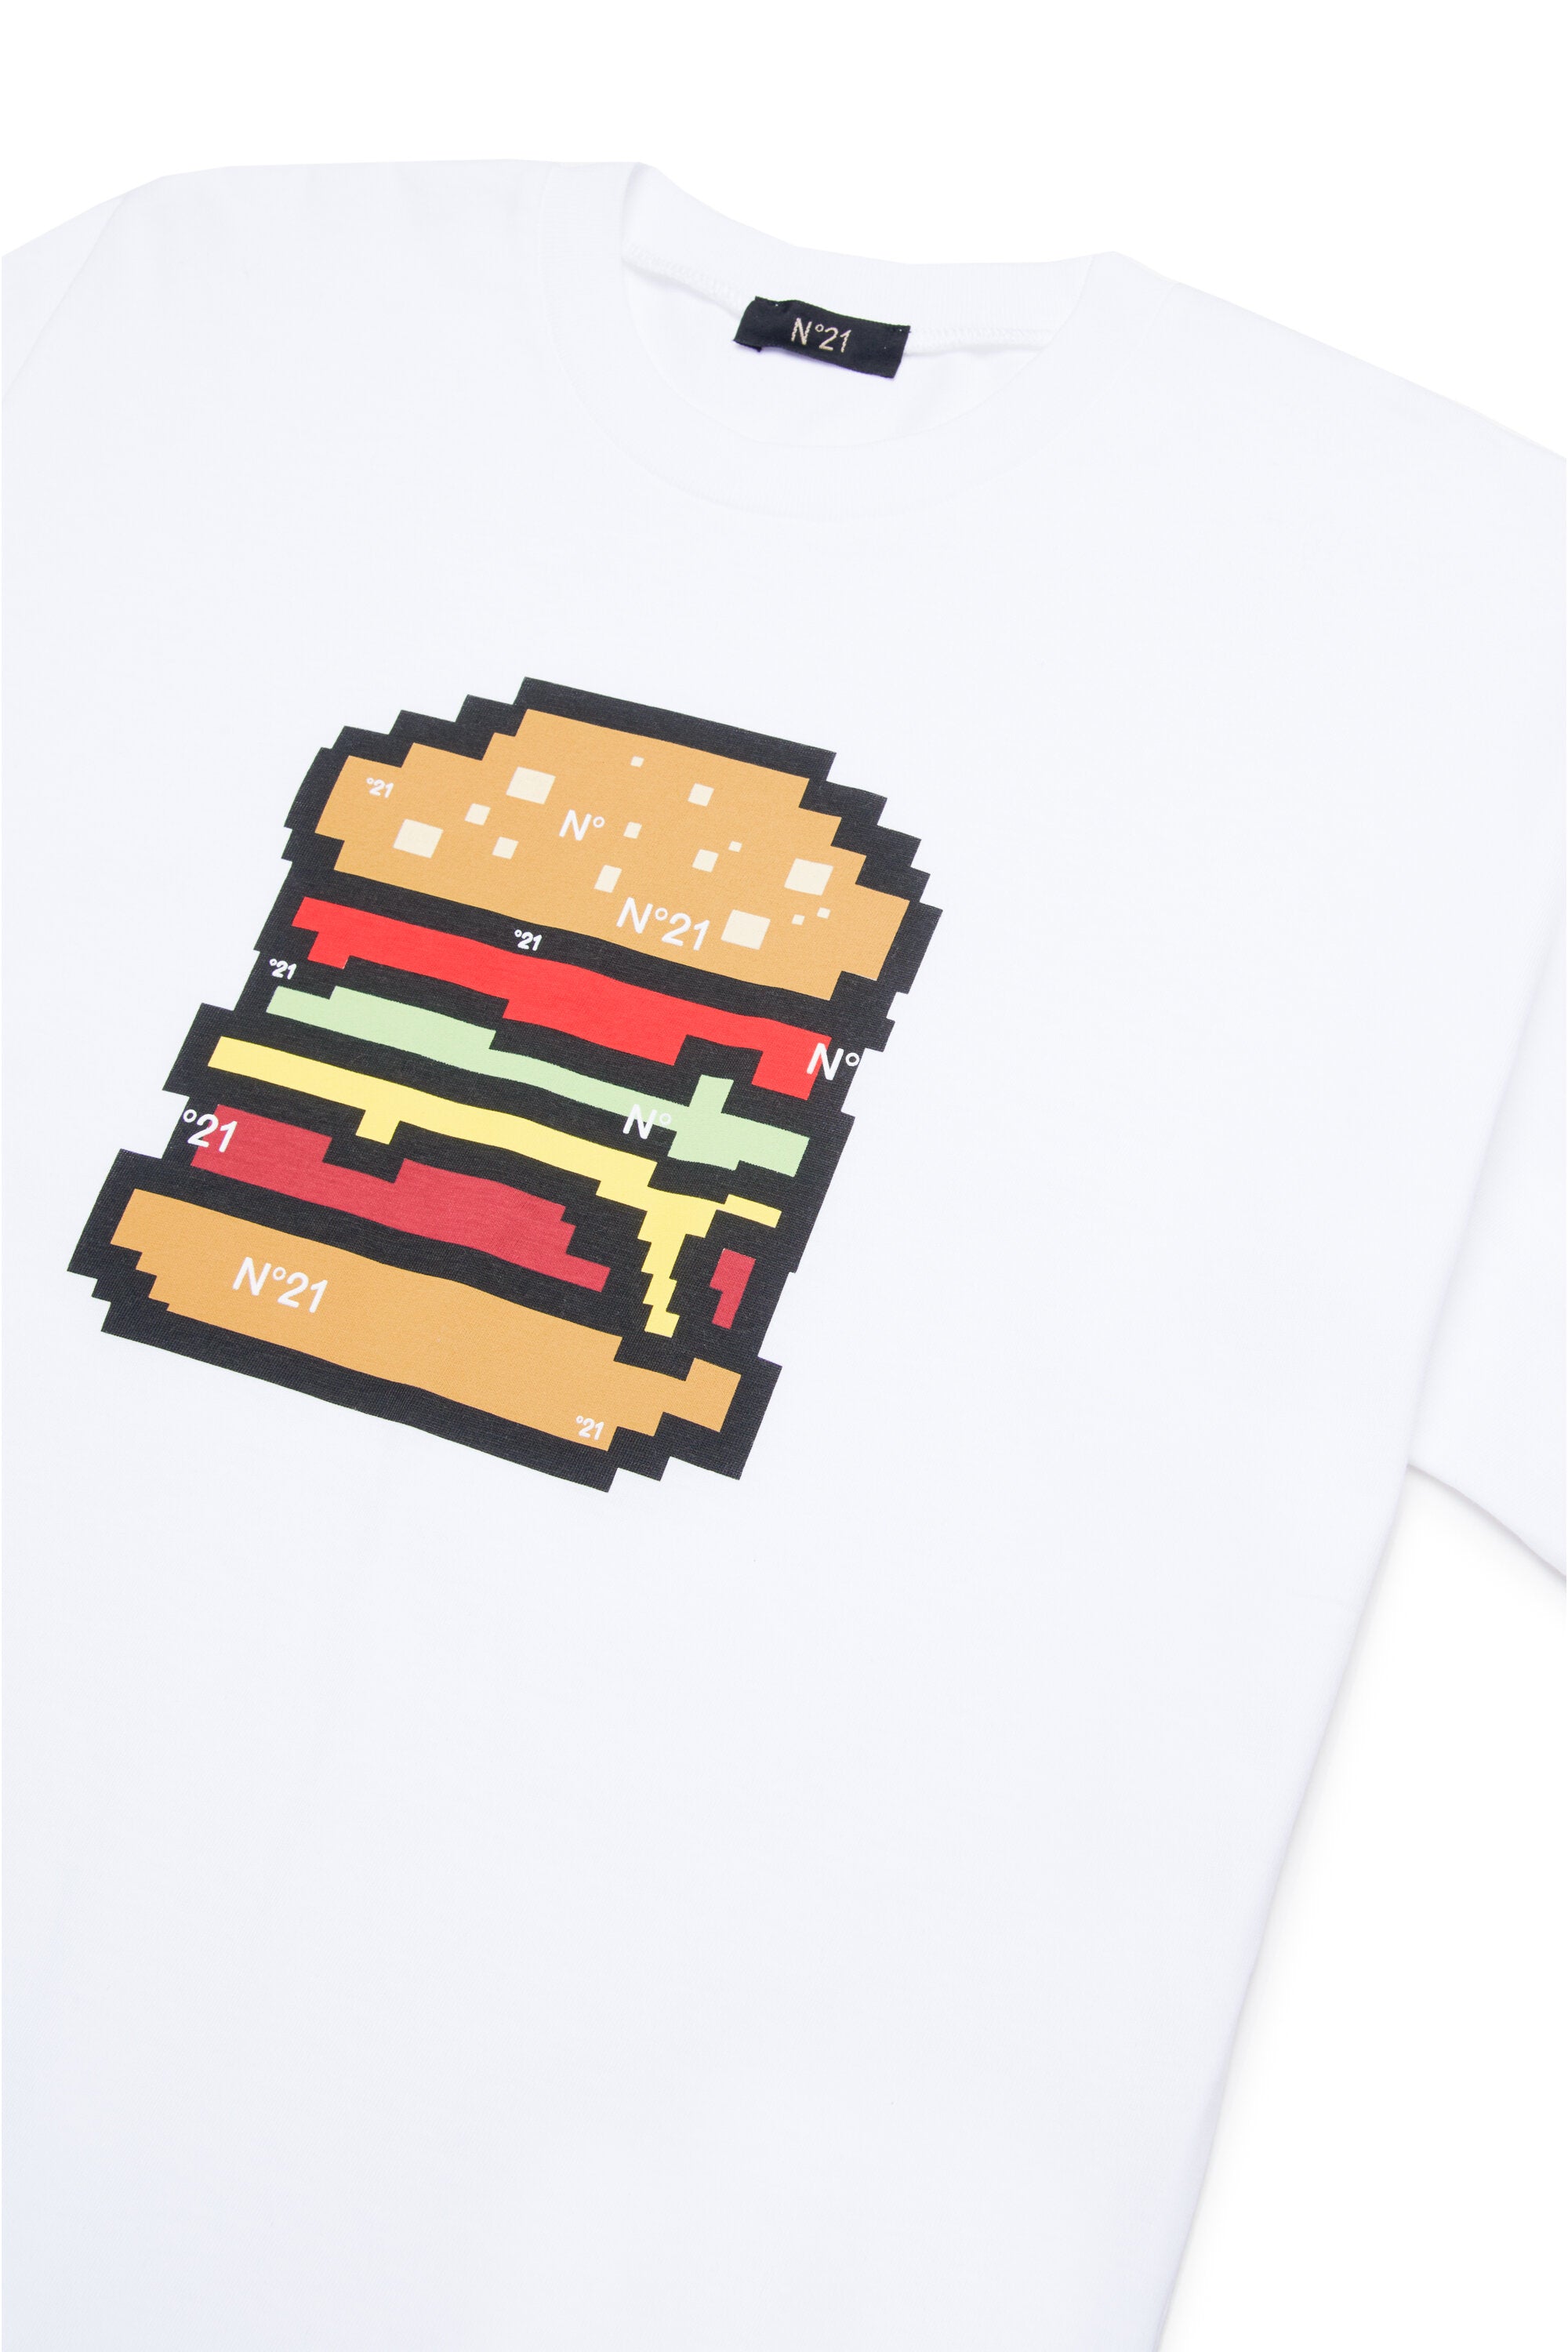 T-shirt con grafica hamburger